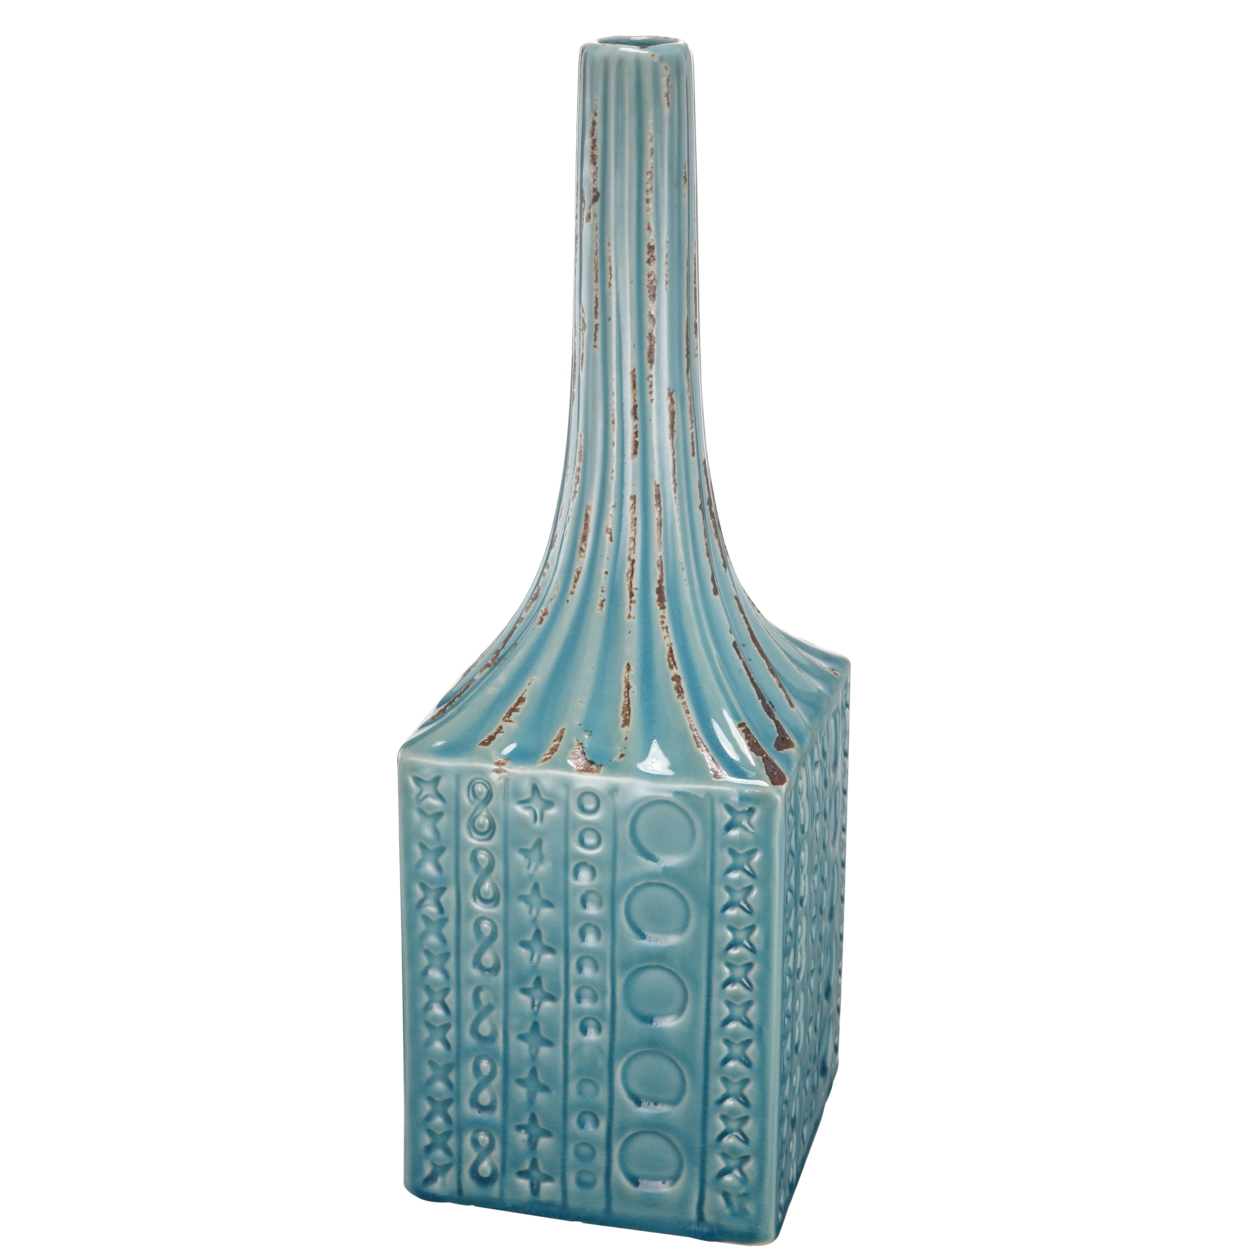 Patterned Ceramic Garden Vase With Elongated Top, Blue- Saltoro Sherpi